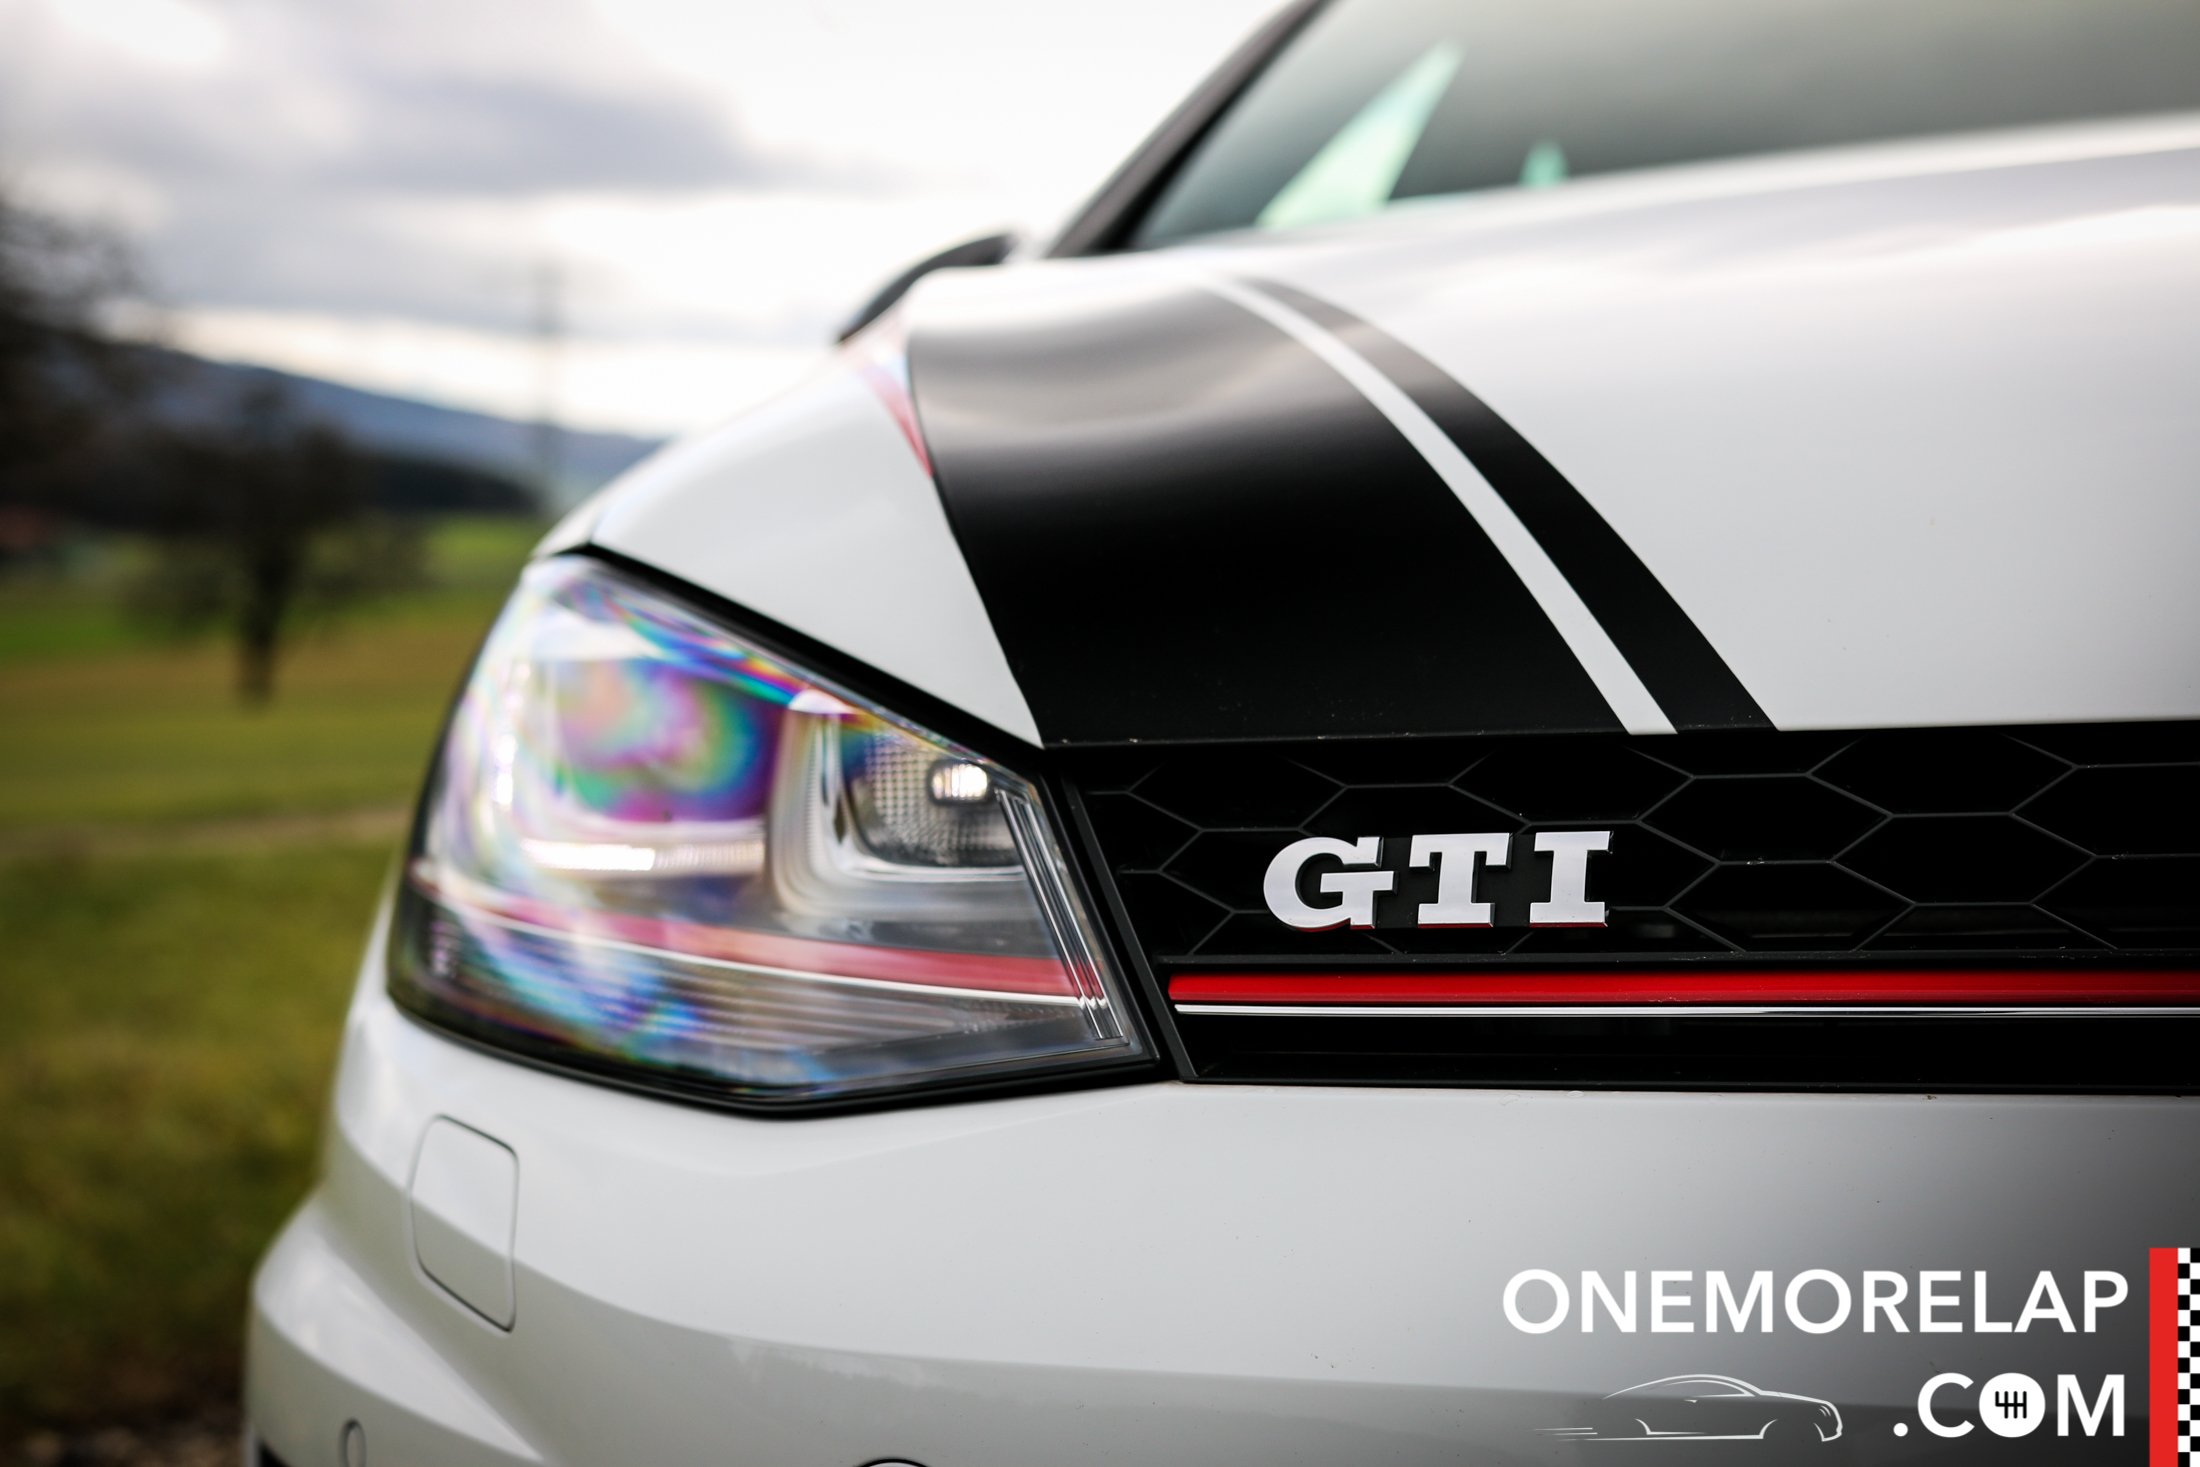 VW Golf GTI Performance Limited Edition